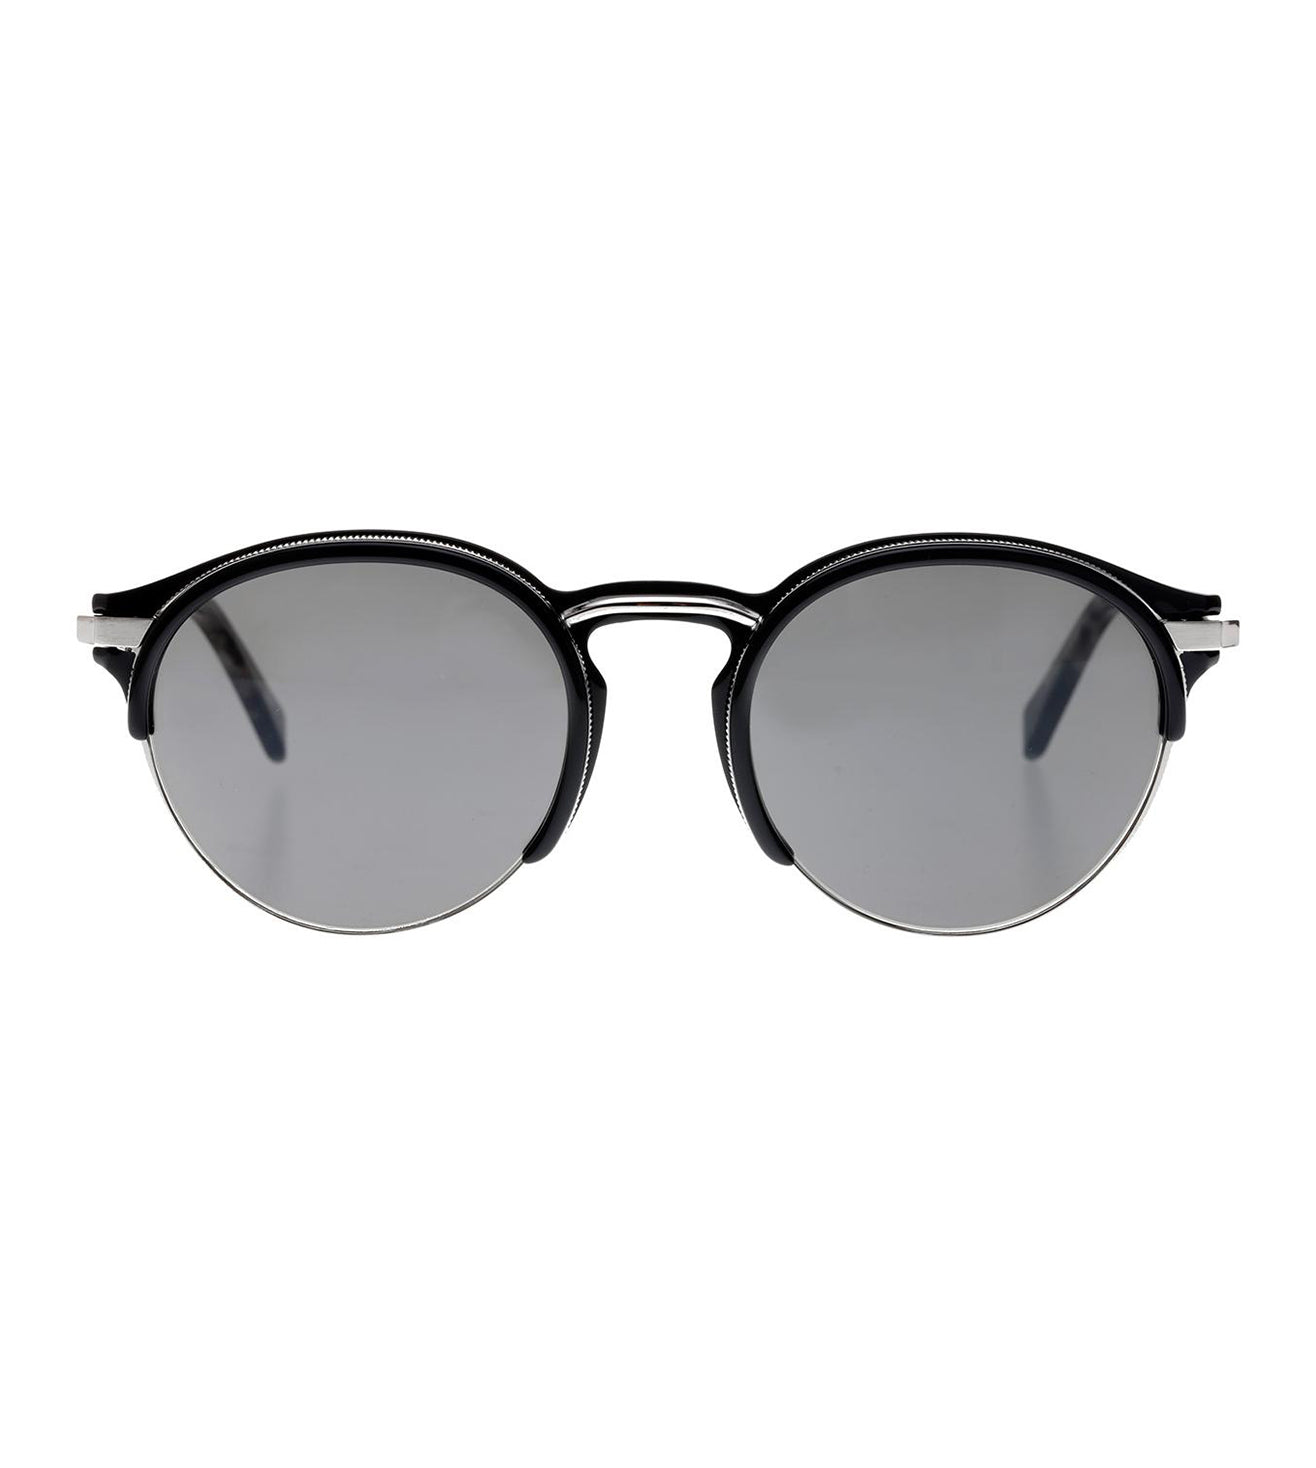 Omega Men's Smoke Round Sunglasses